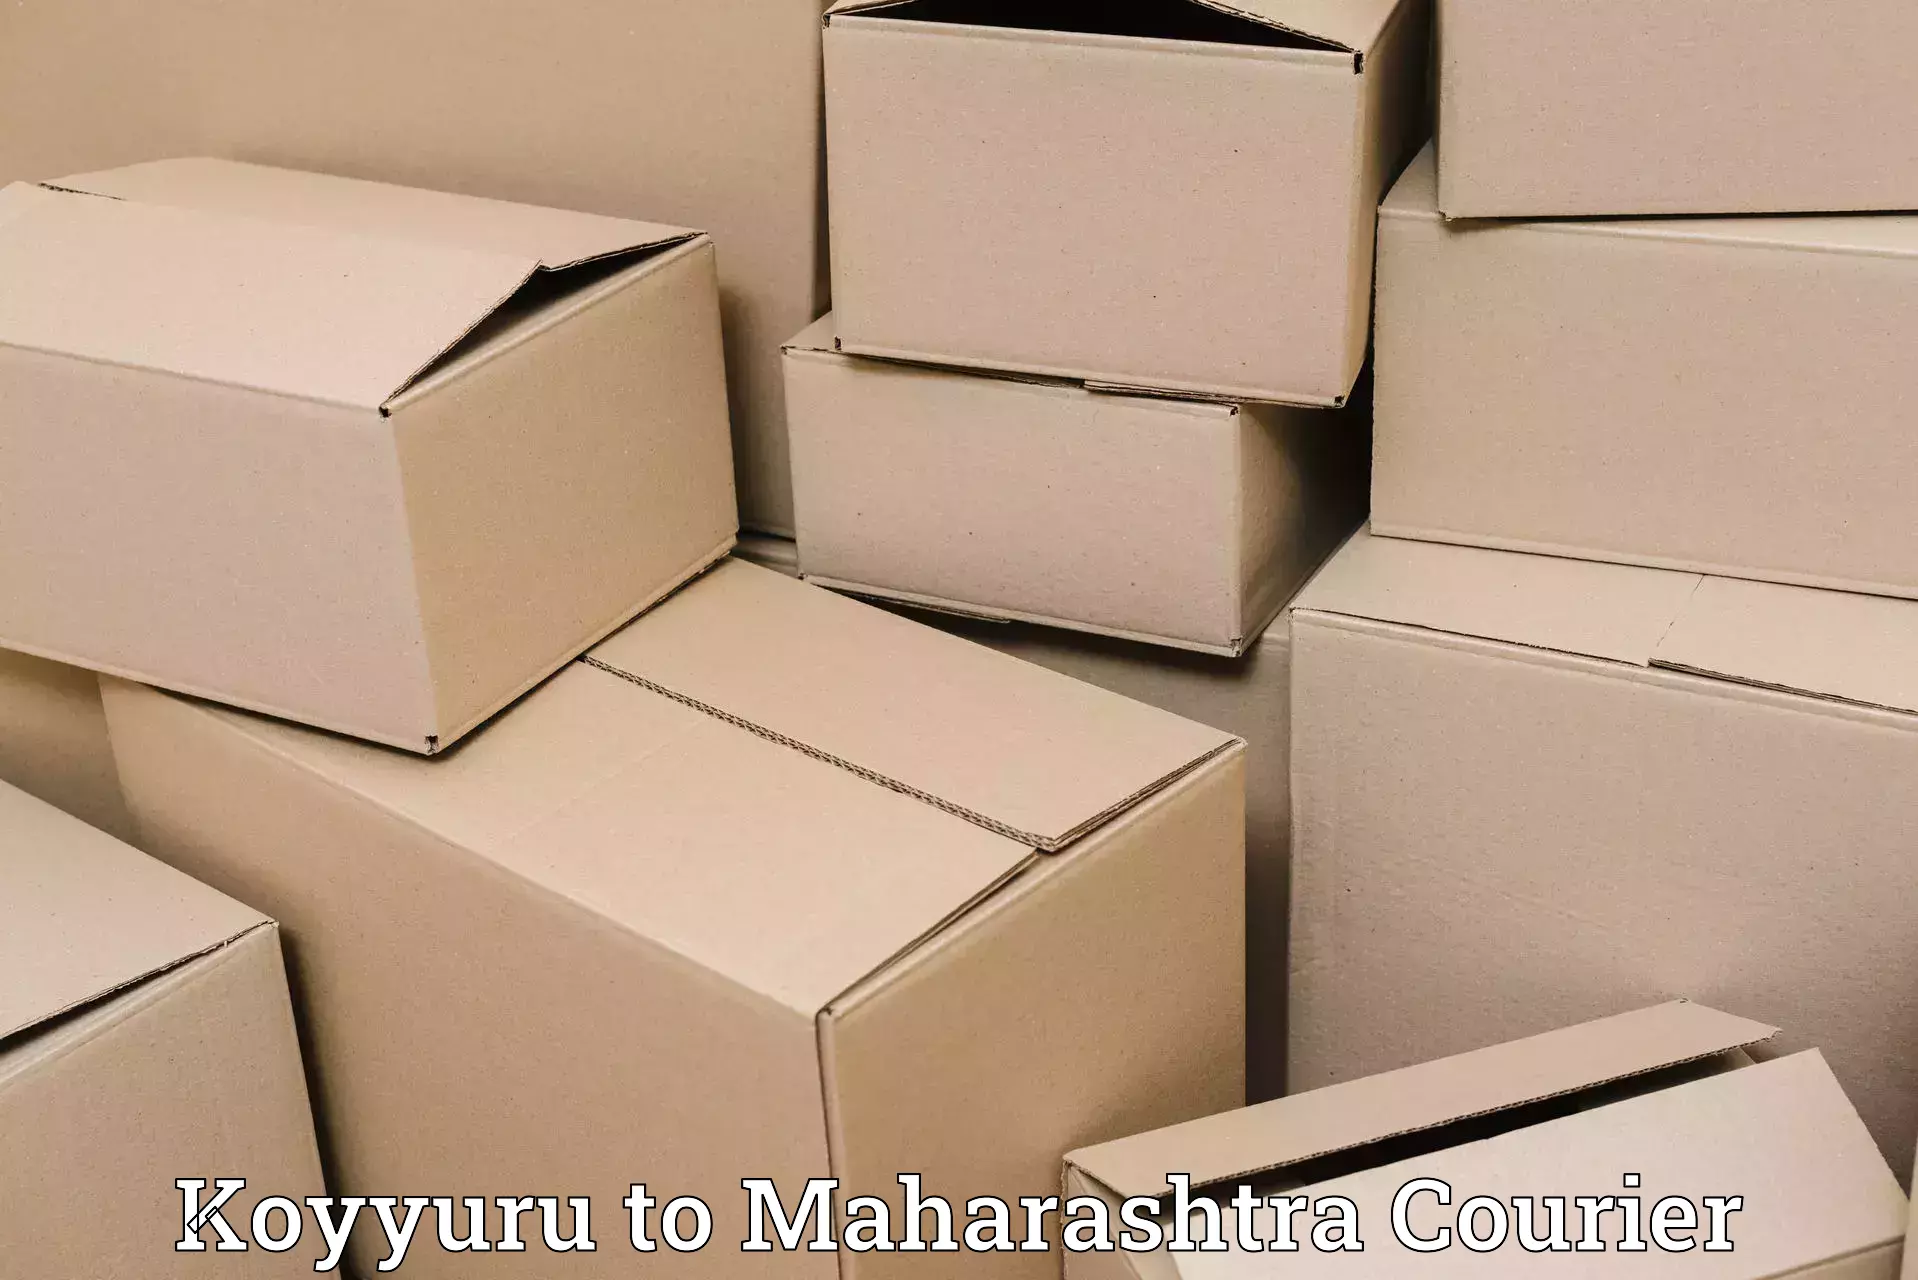 Courier services in Koyyuru to Phaltan